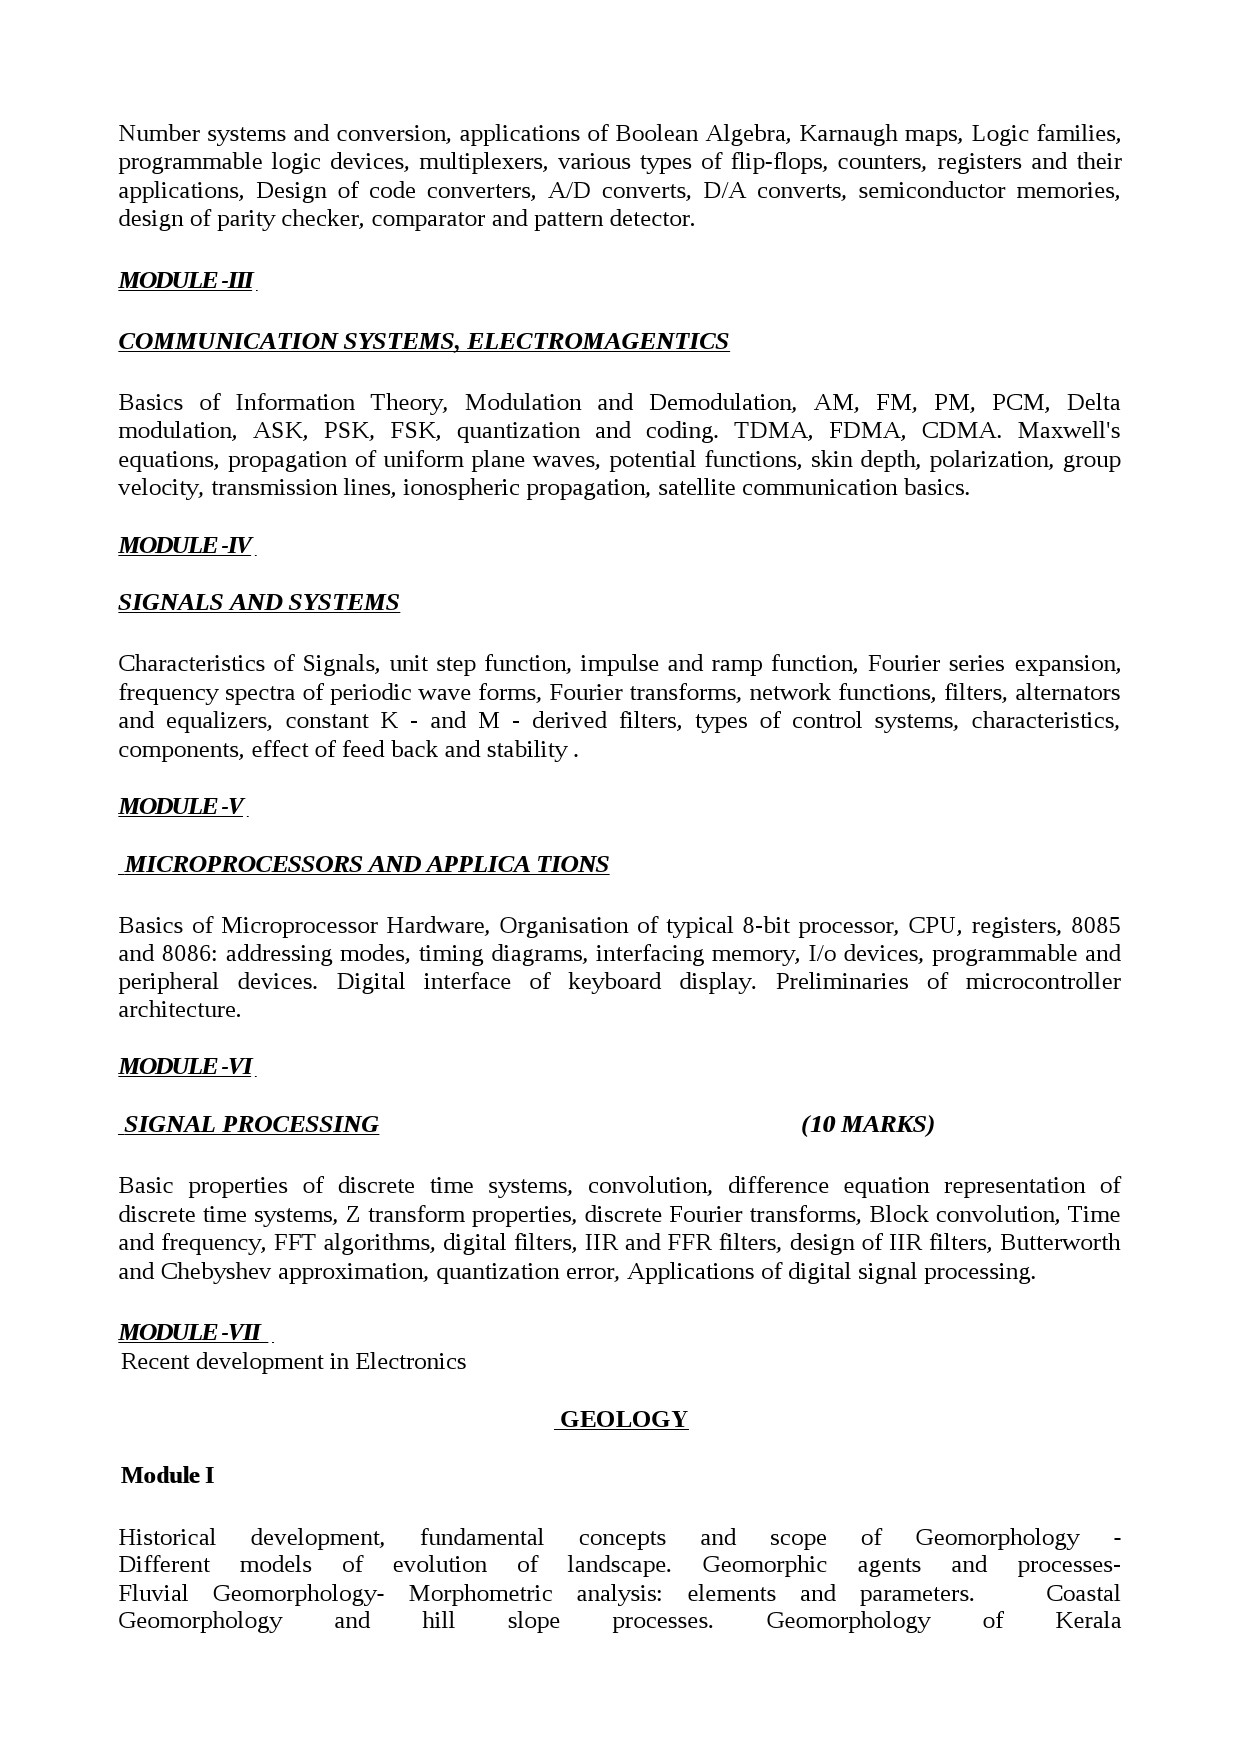 Science Syllabus for Kerala PSC 2021 Exam - Notification Image 24